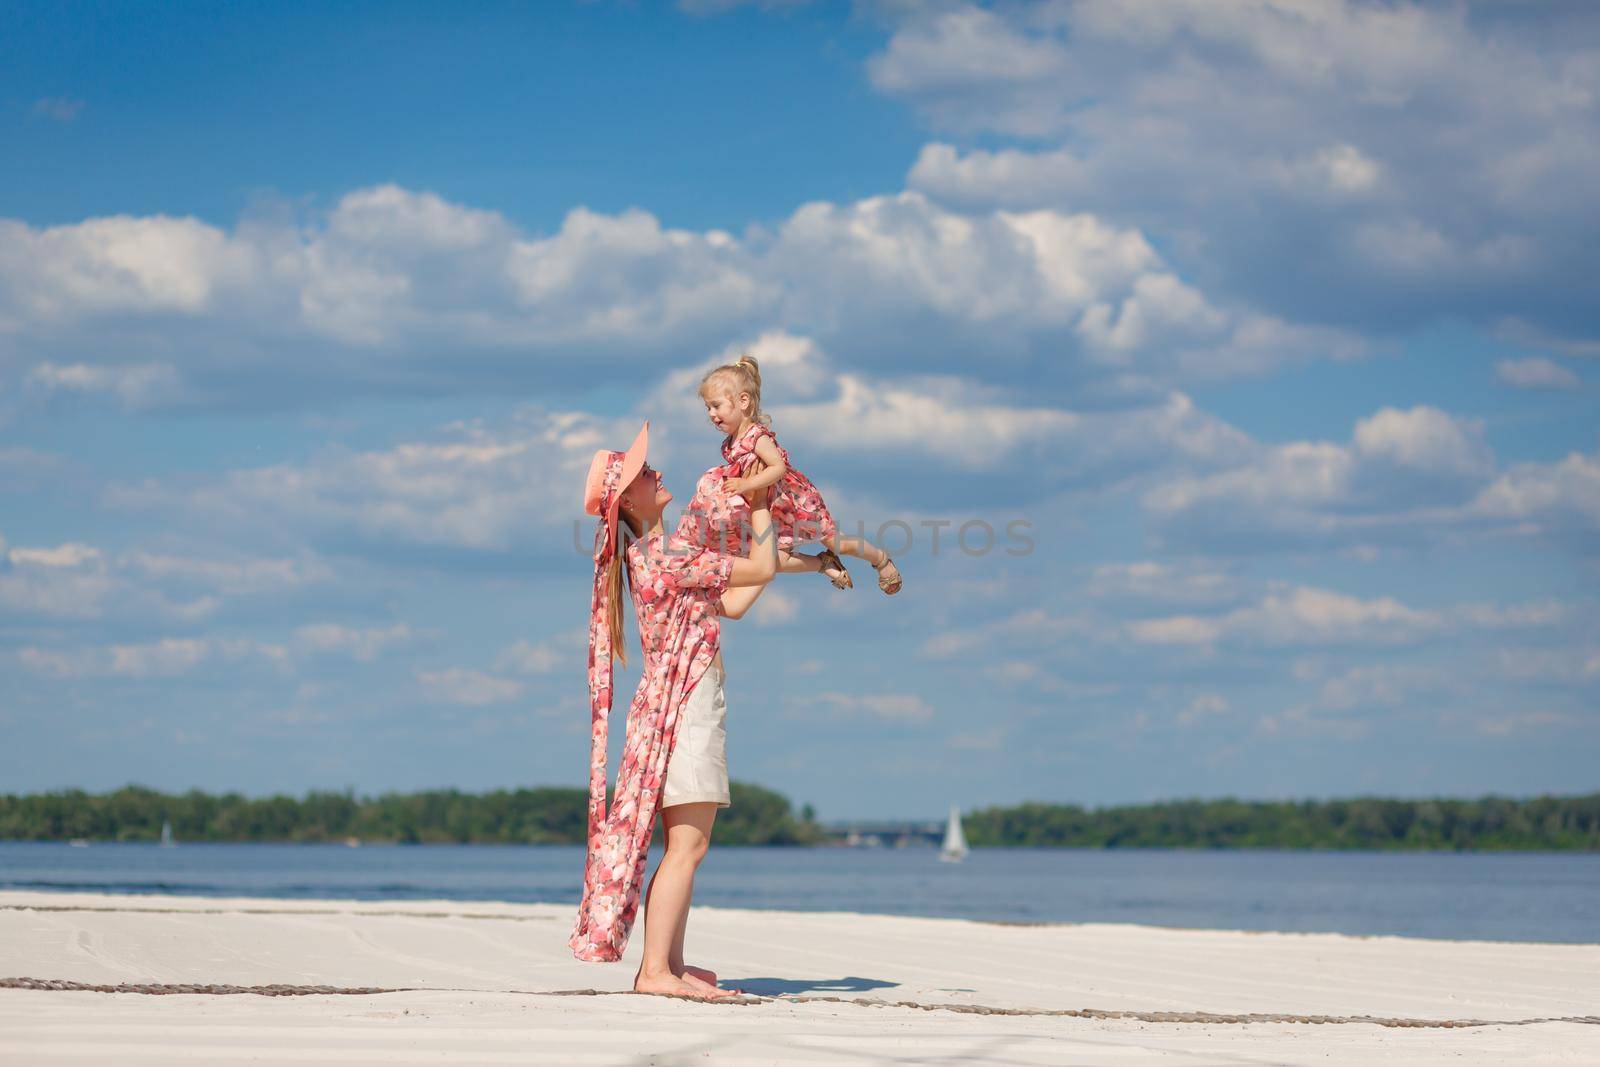 A charming girl in a light summer sundress walks on the sandy beach with her little daughter. Enjoys warm sunny summer days.